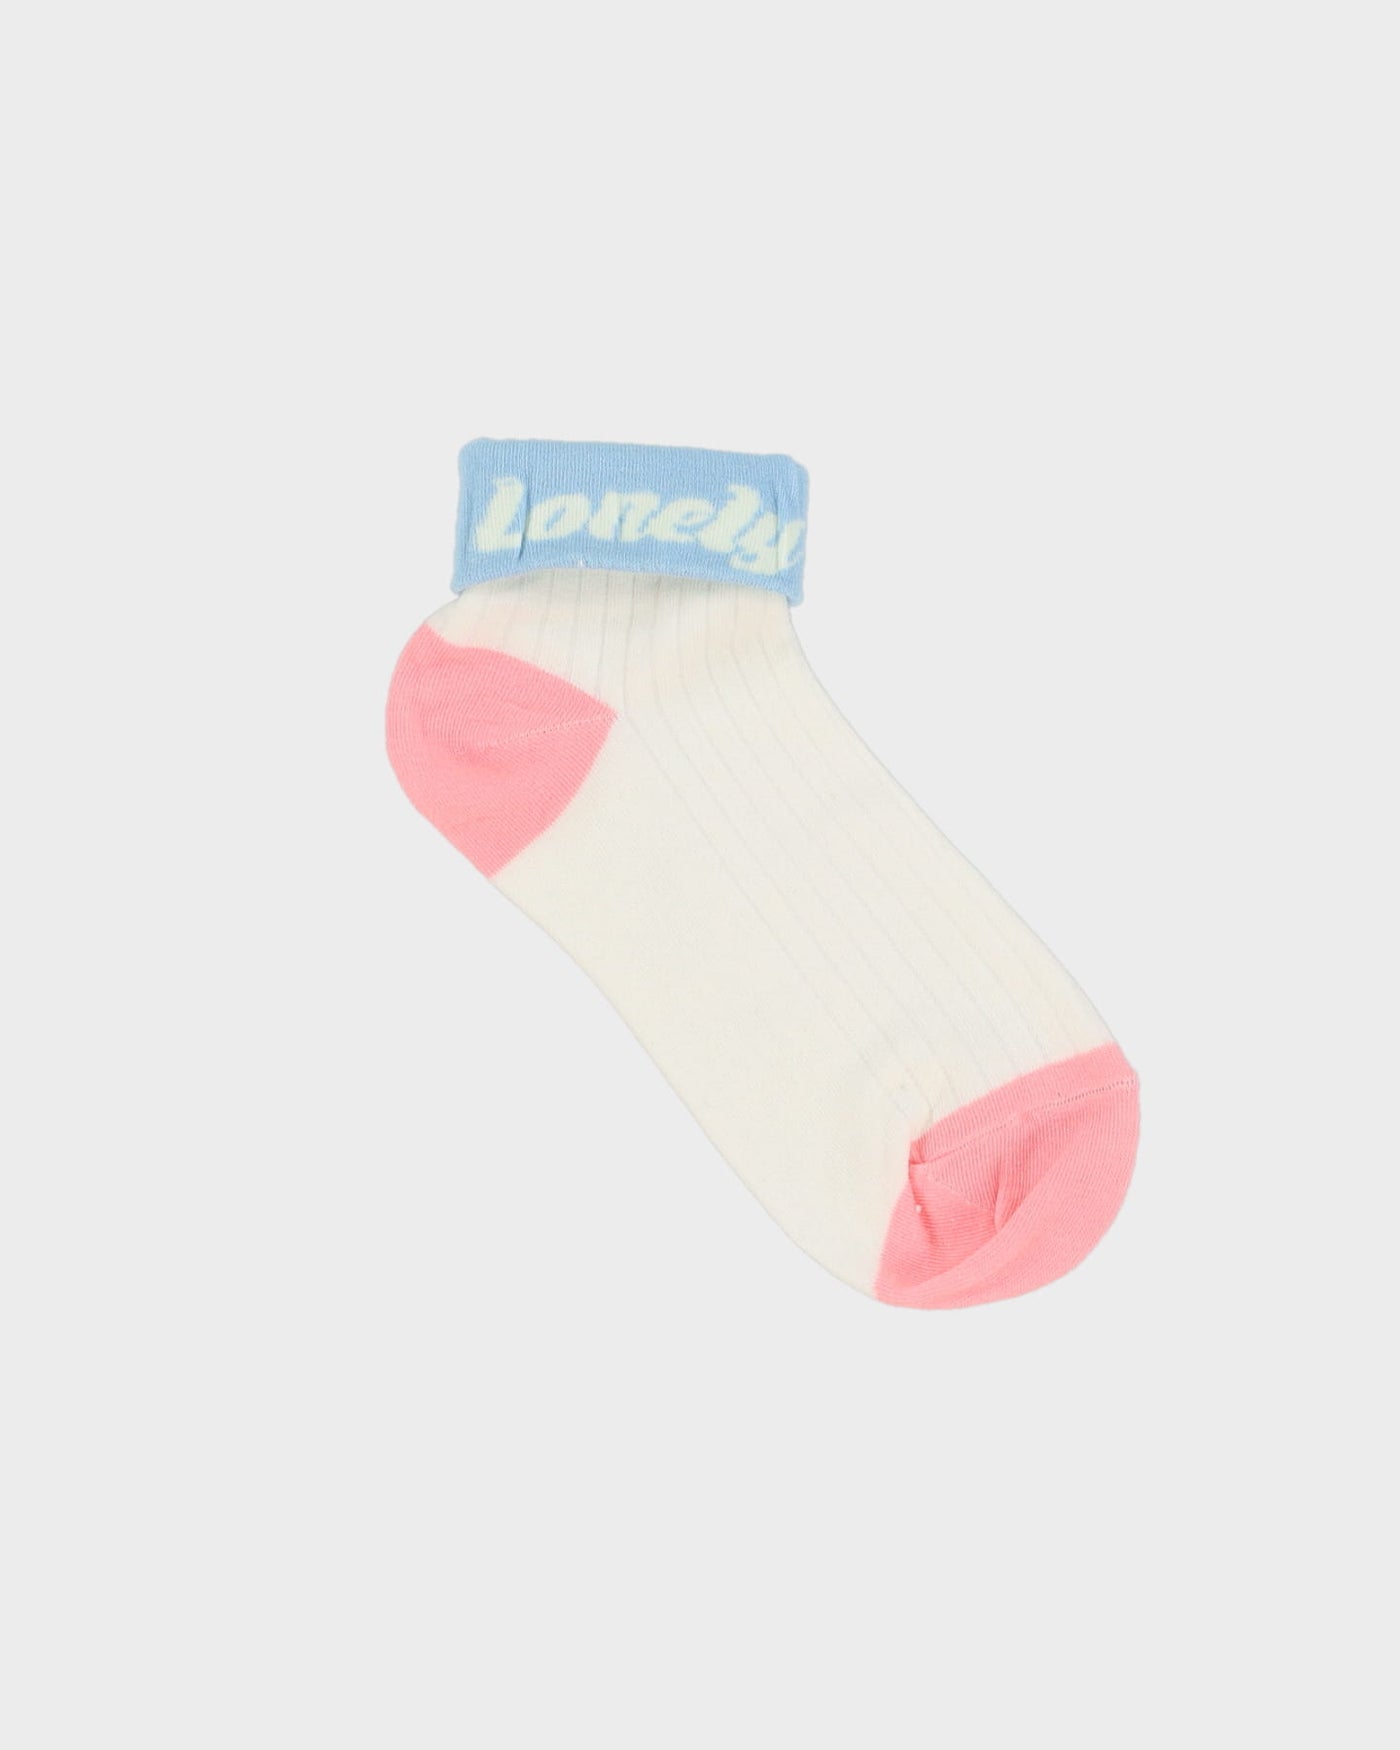 Lonely Cream / Baby Blue / Pink Socks